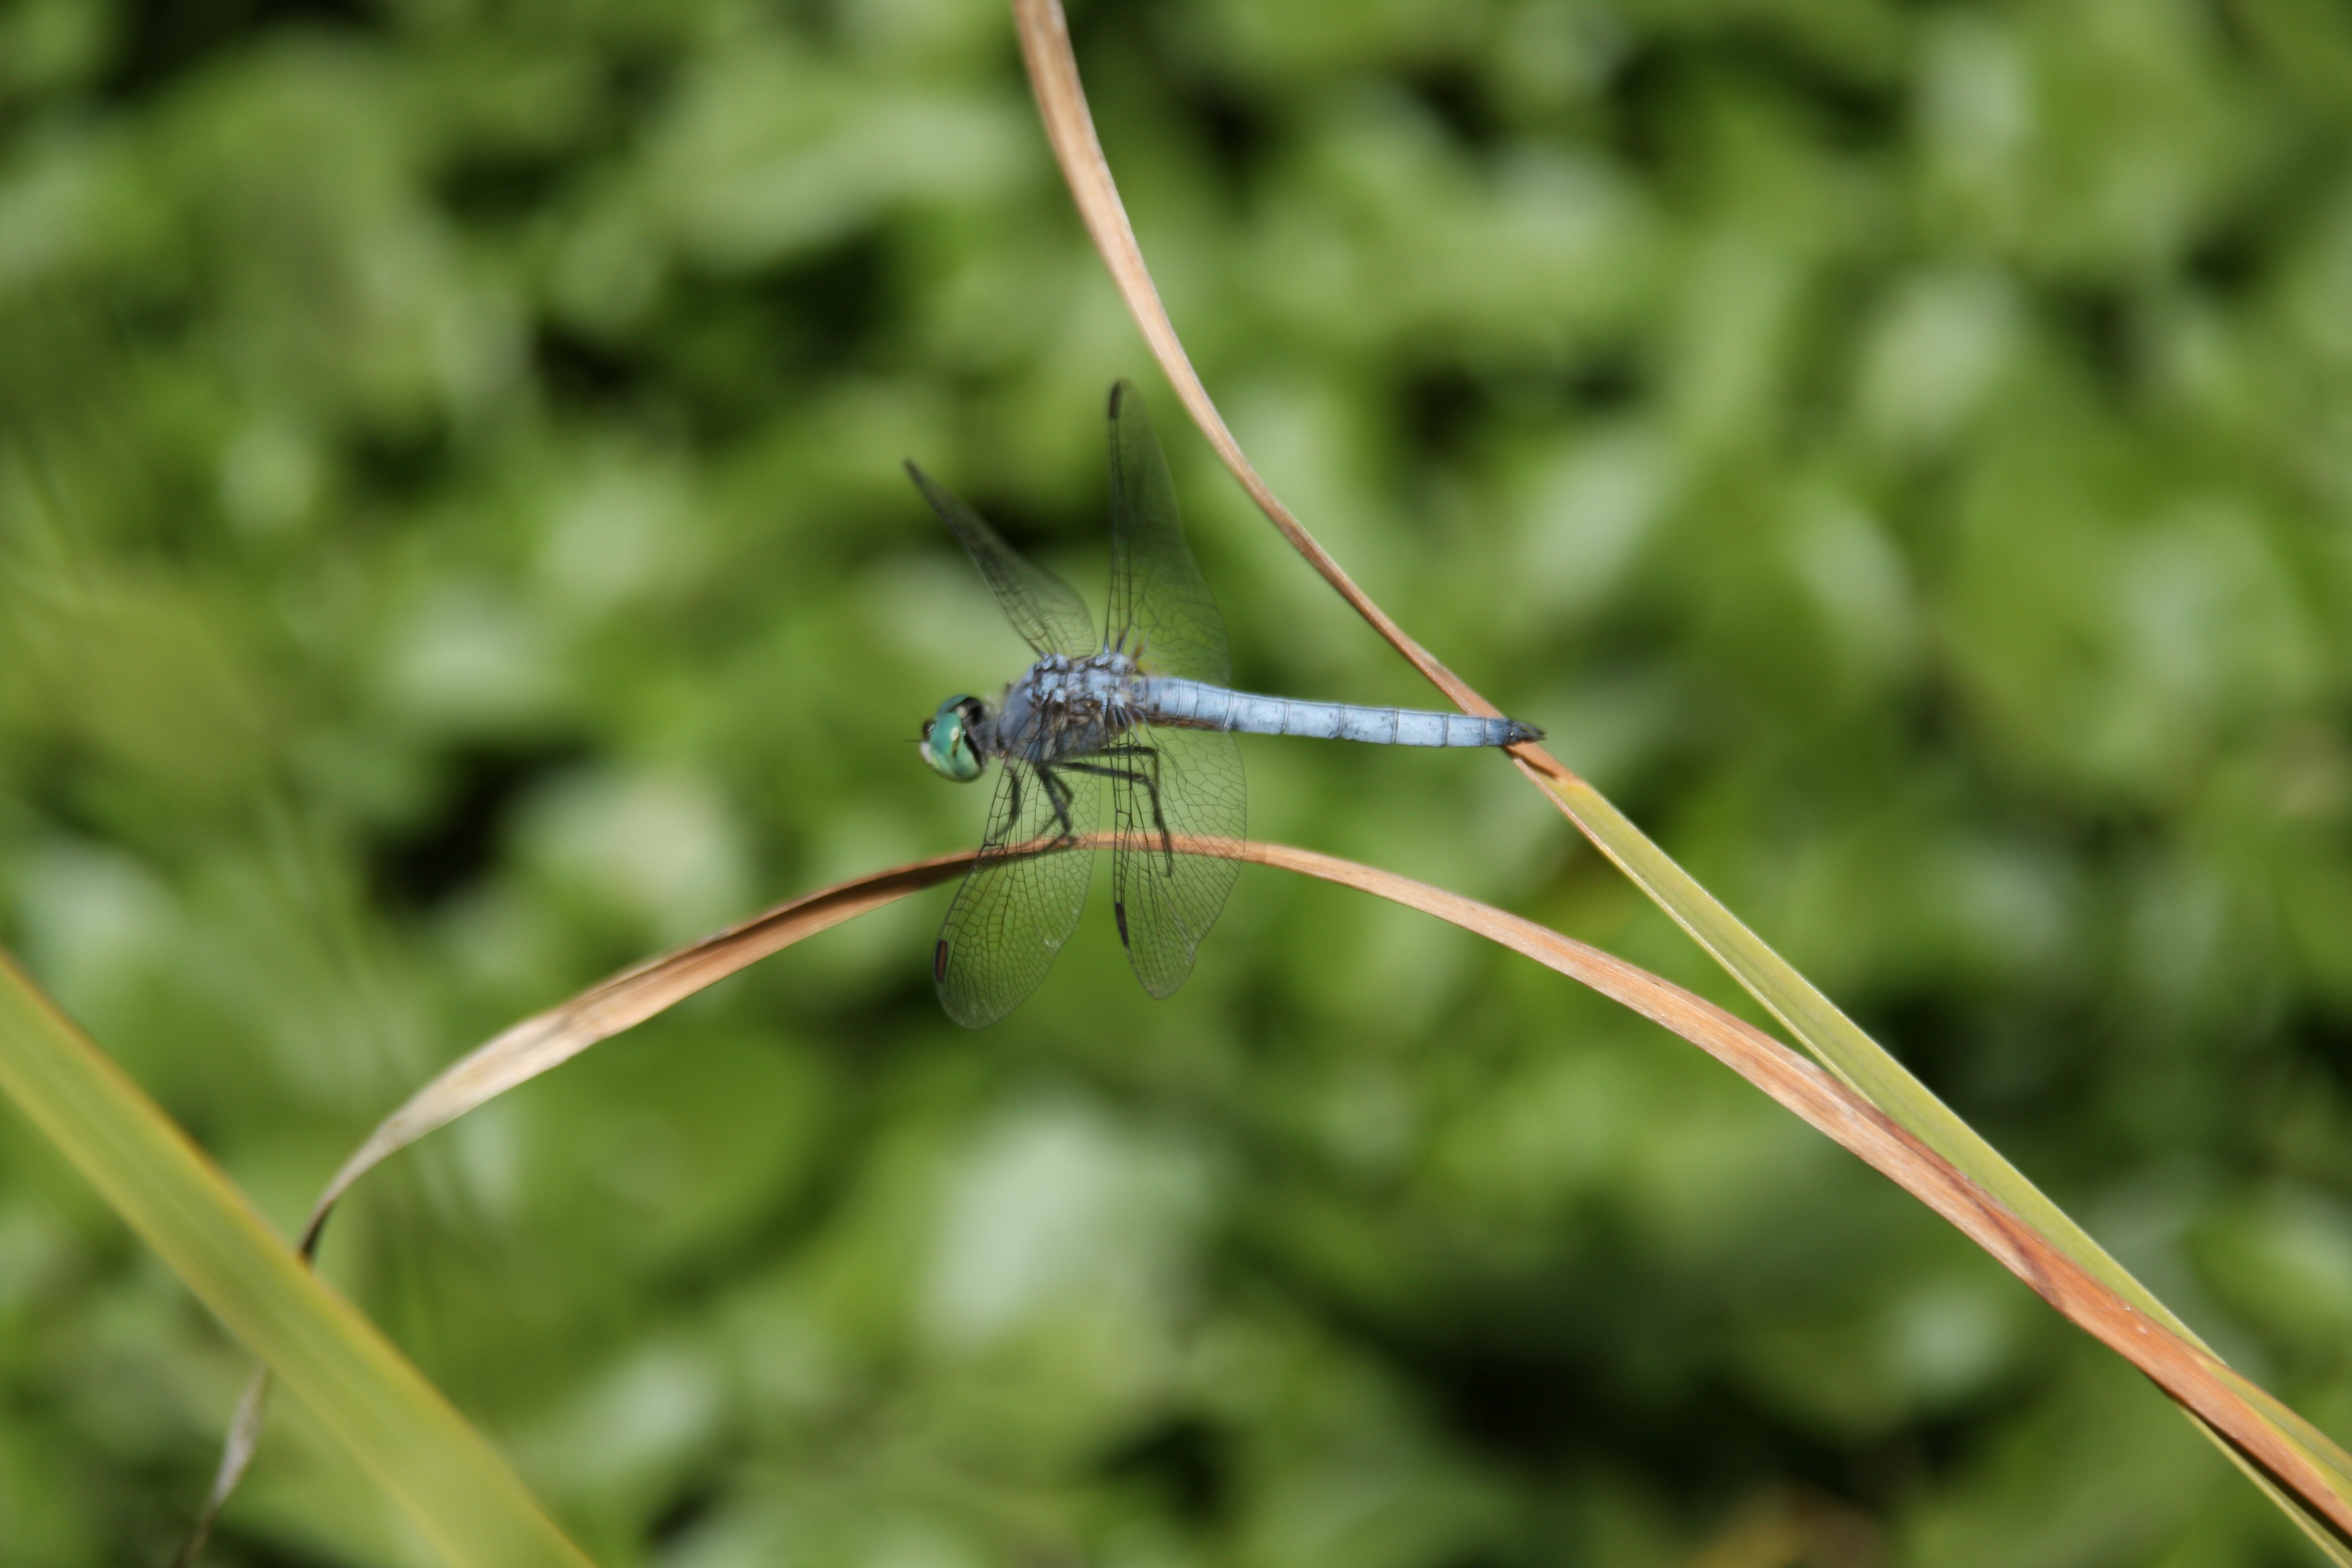 Blue dasher dragonfly resting on vegetation